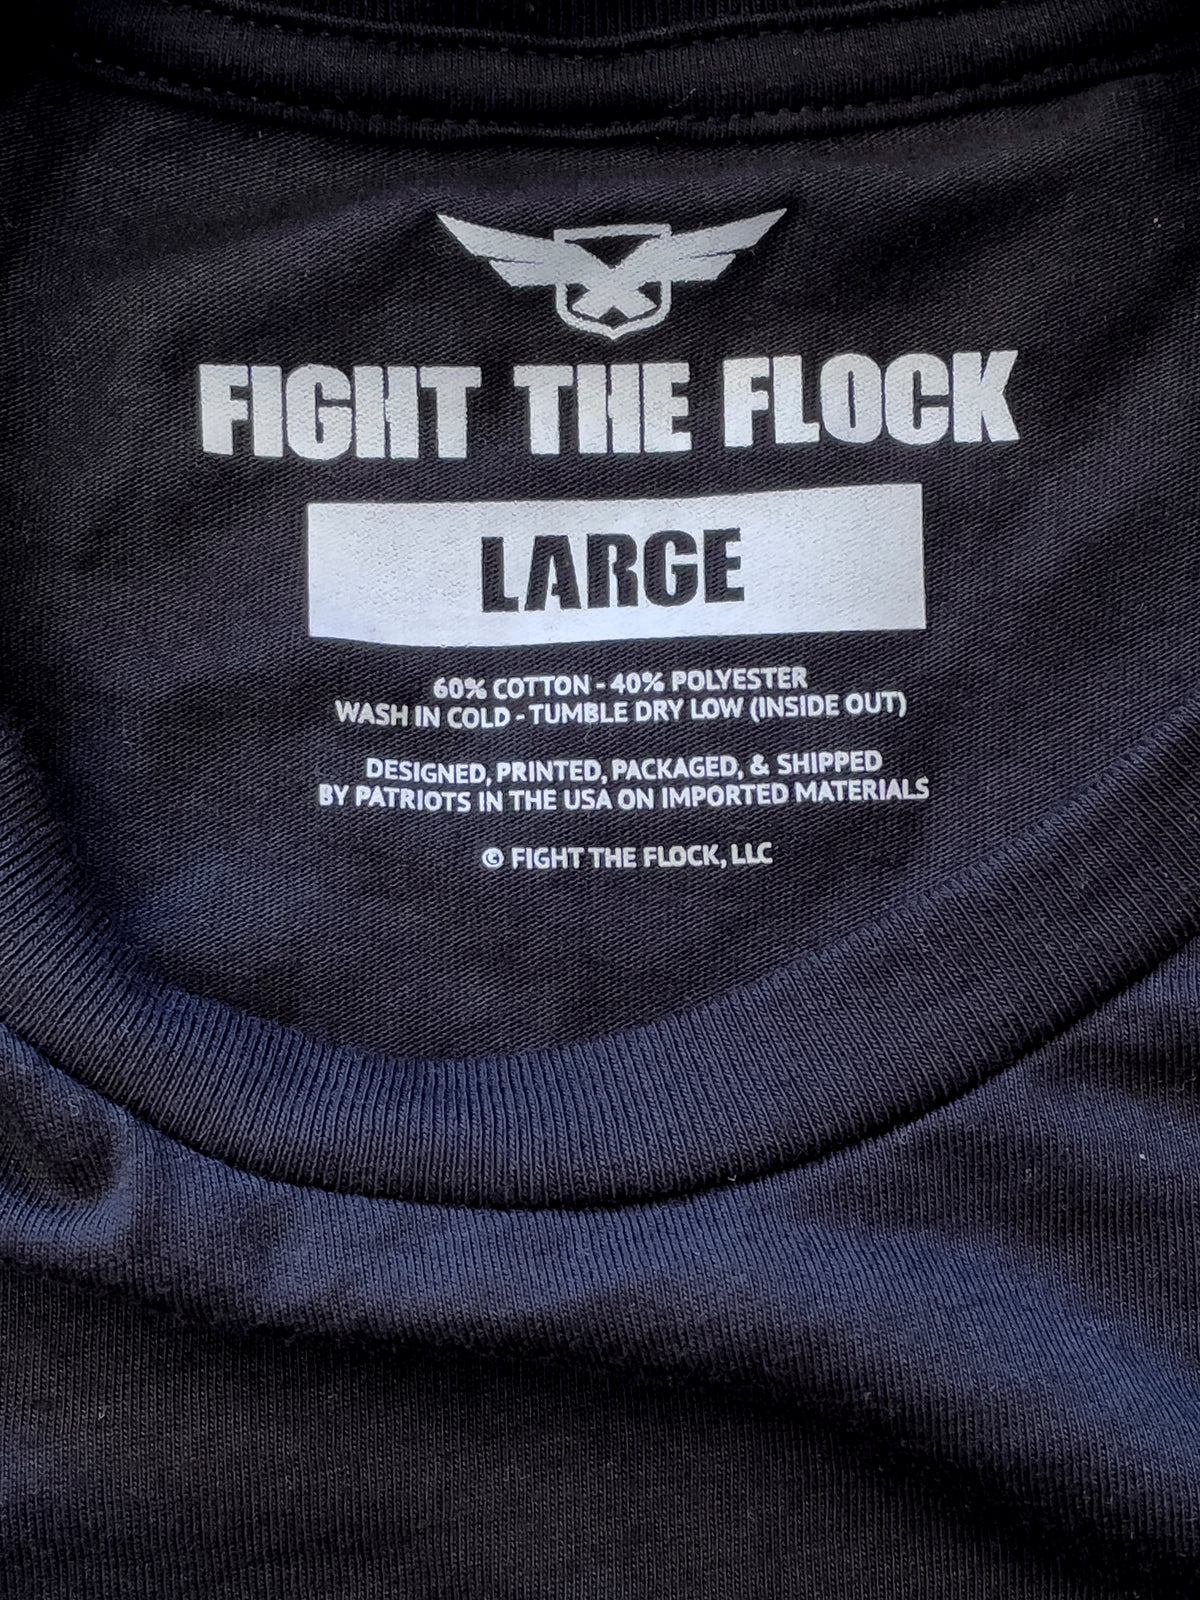 LEADERS COAT OF ARMS Mens Crewneck T-Shirt